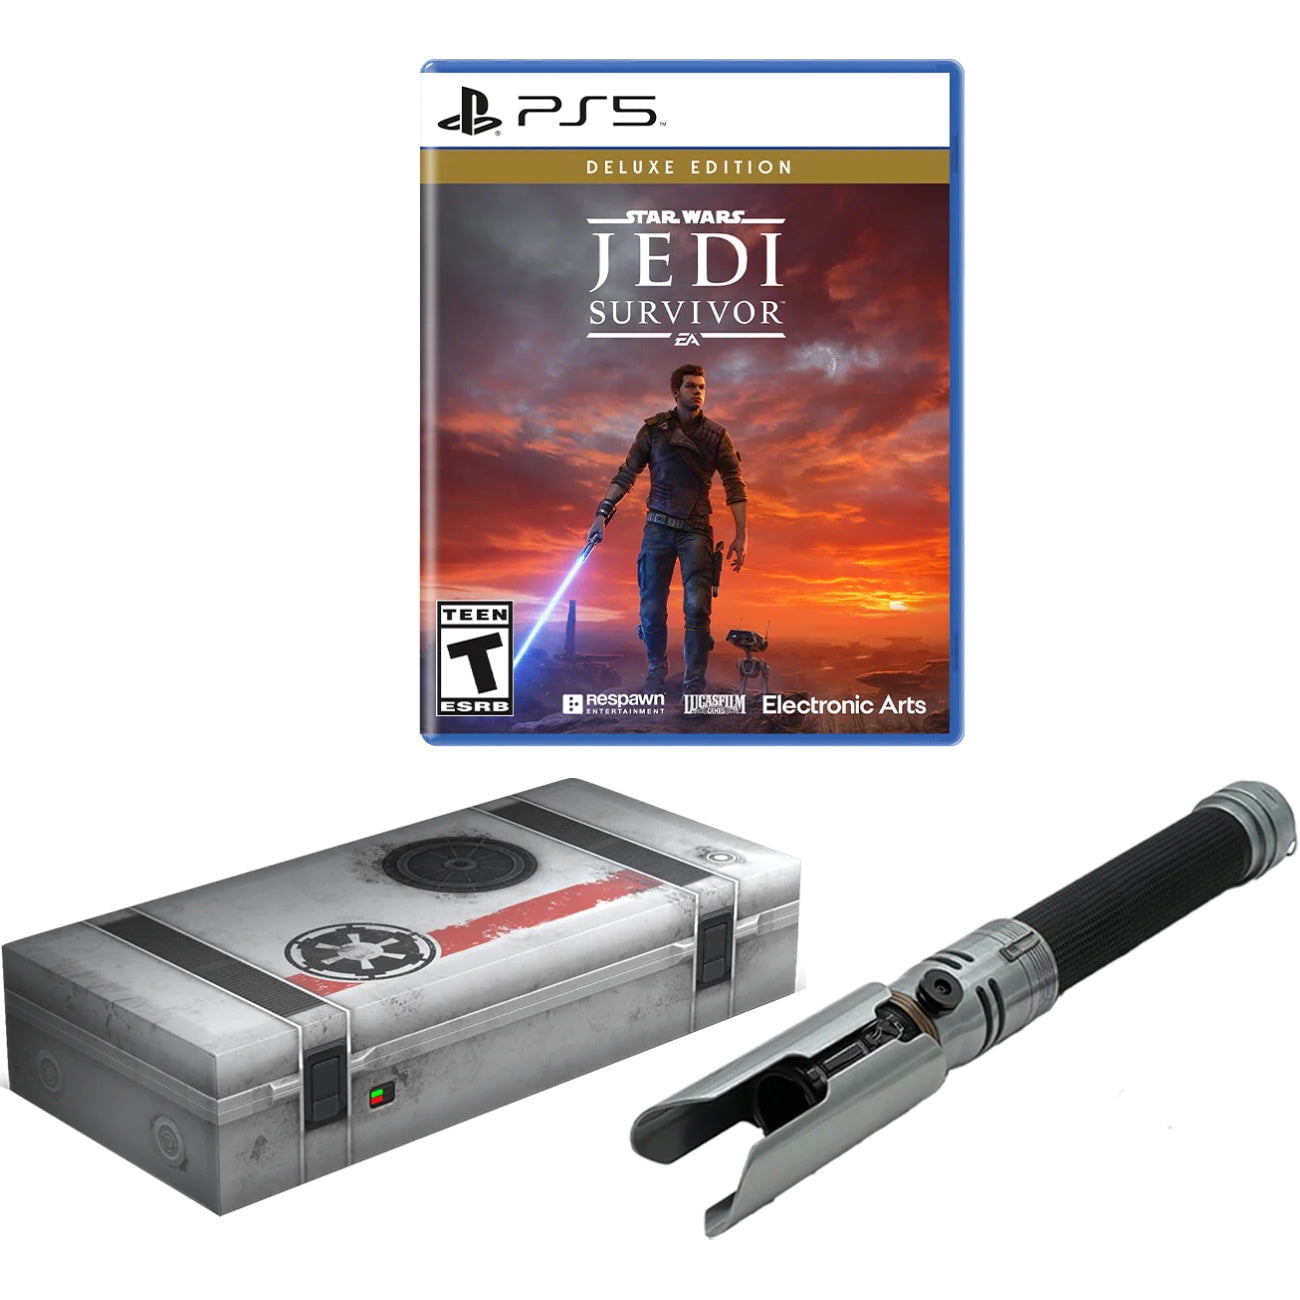 Star Wars Jedi: Survivor PlayStation 5 Review